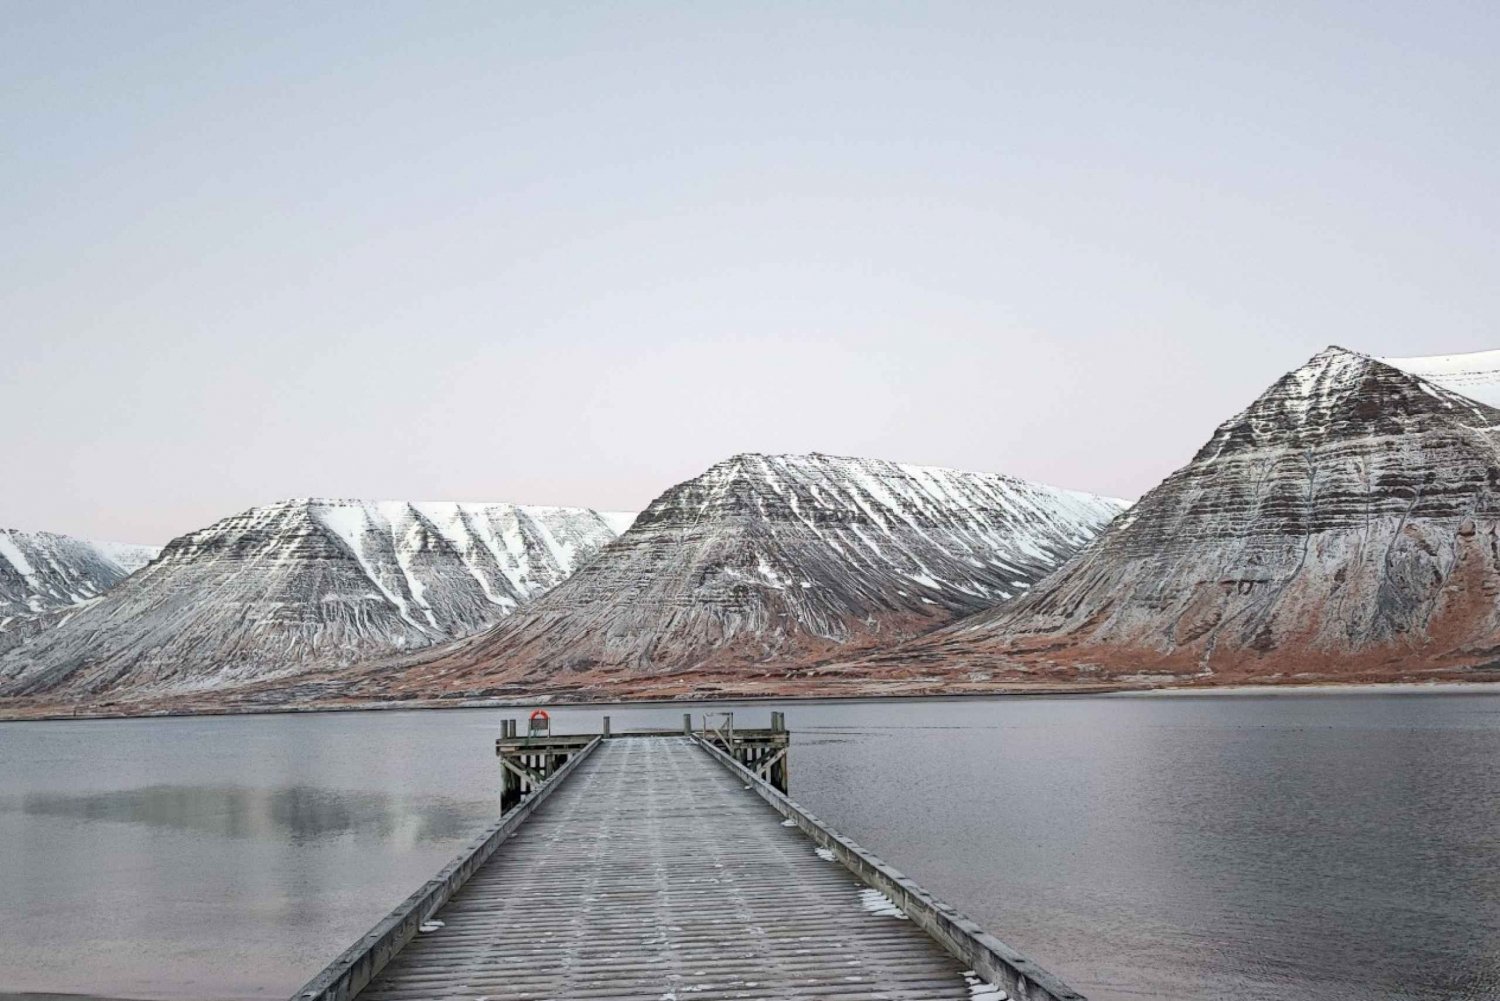 From Reykjavík: 3-Day Tour of the Wild Westfjords